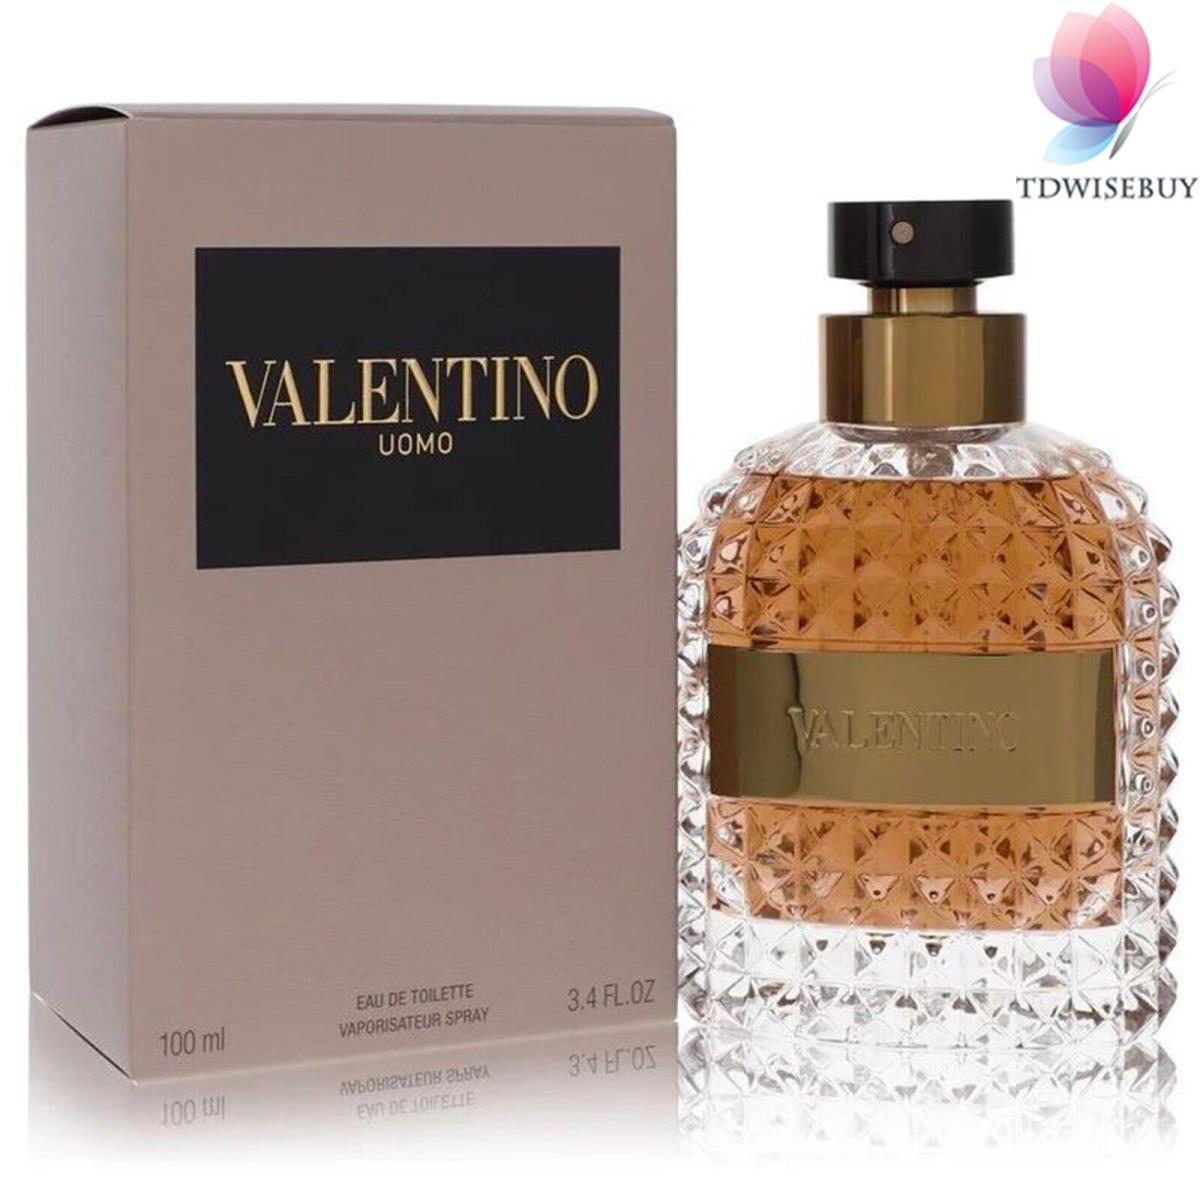 Valentino Uomo Cologne Men Perfume by Valentino Eau De Toilette Spray 3.4 oz Edt